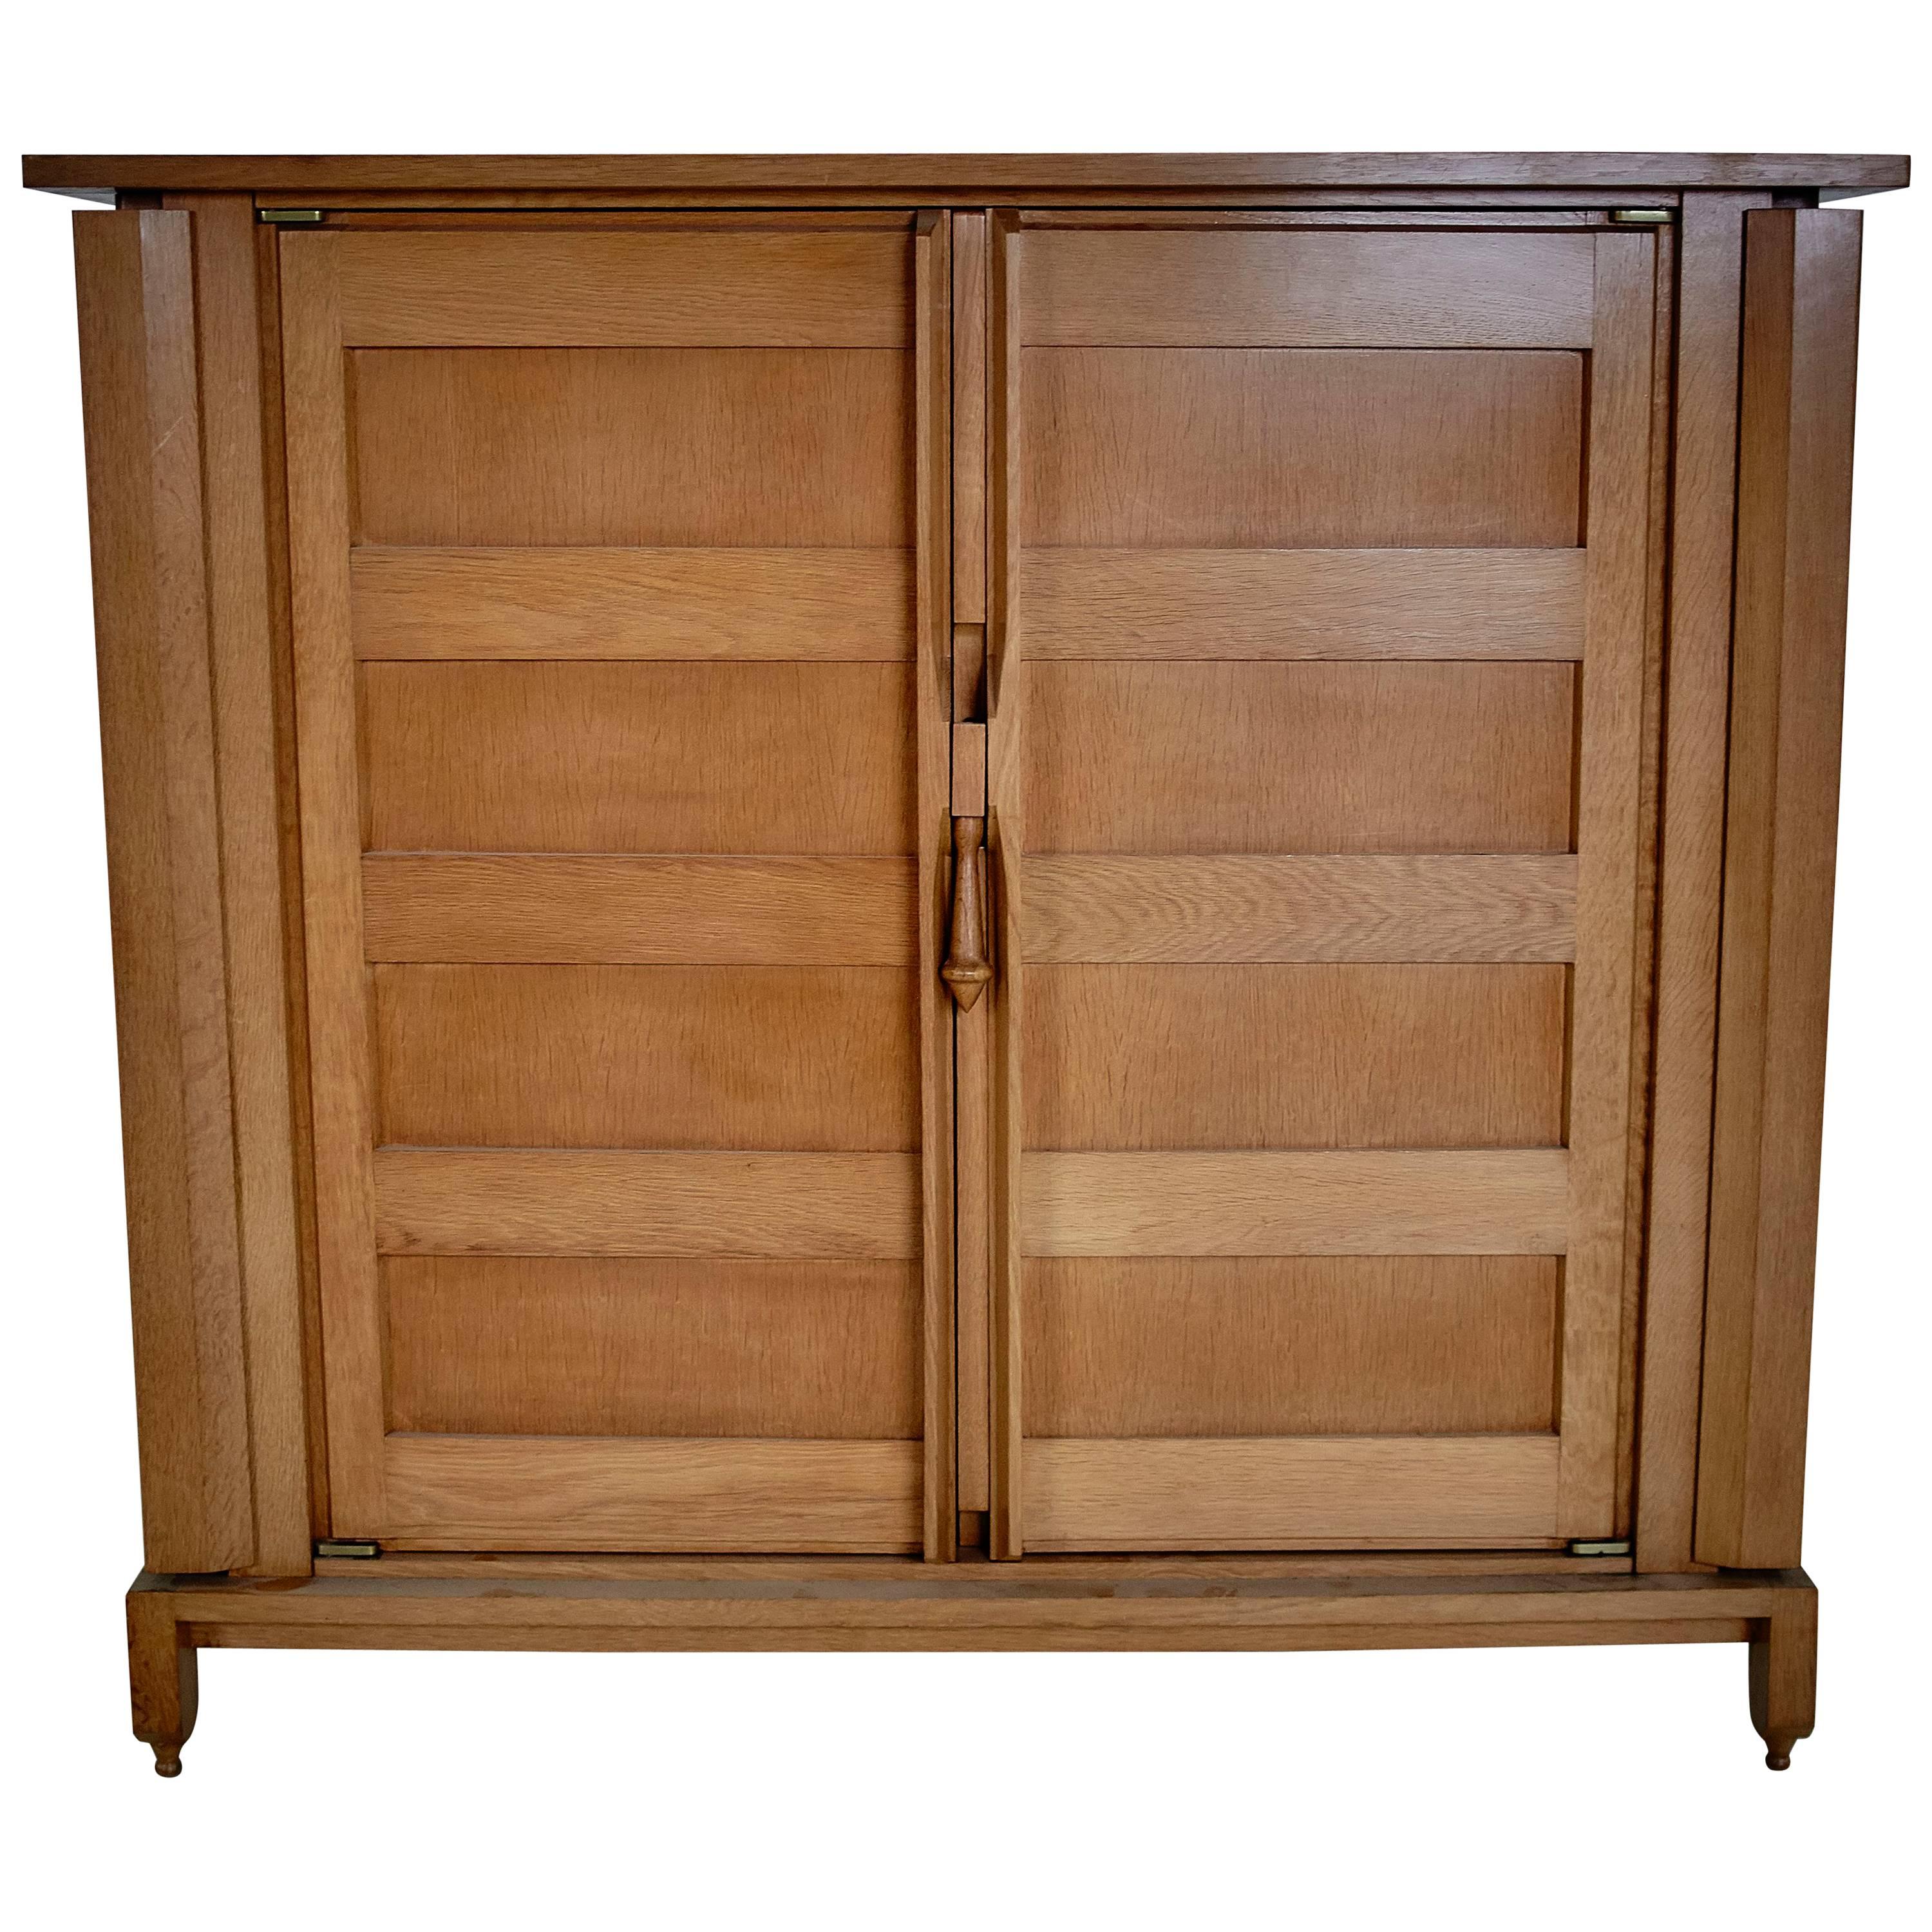 Guillerme & Chambron "Bouvine" Veneer Oak Cabinet